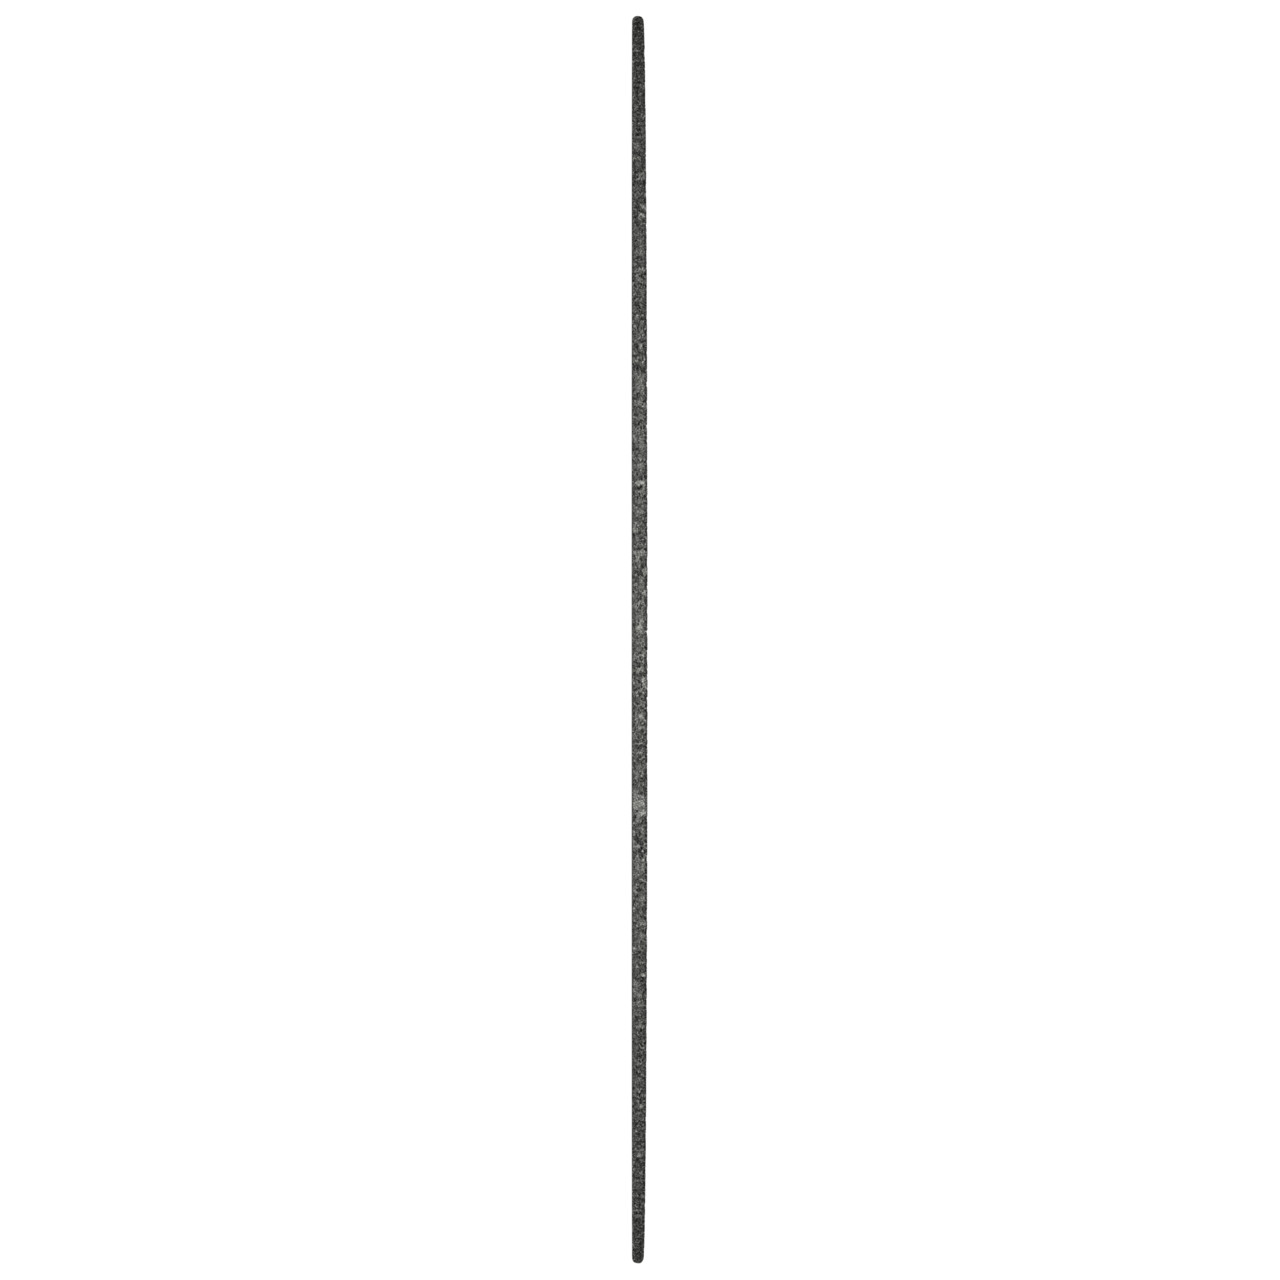 Dischi da taglio Tyrolit DxDxH 63x1x10 Per acciaio, forma: 41 - versione diritta, Art. 699330